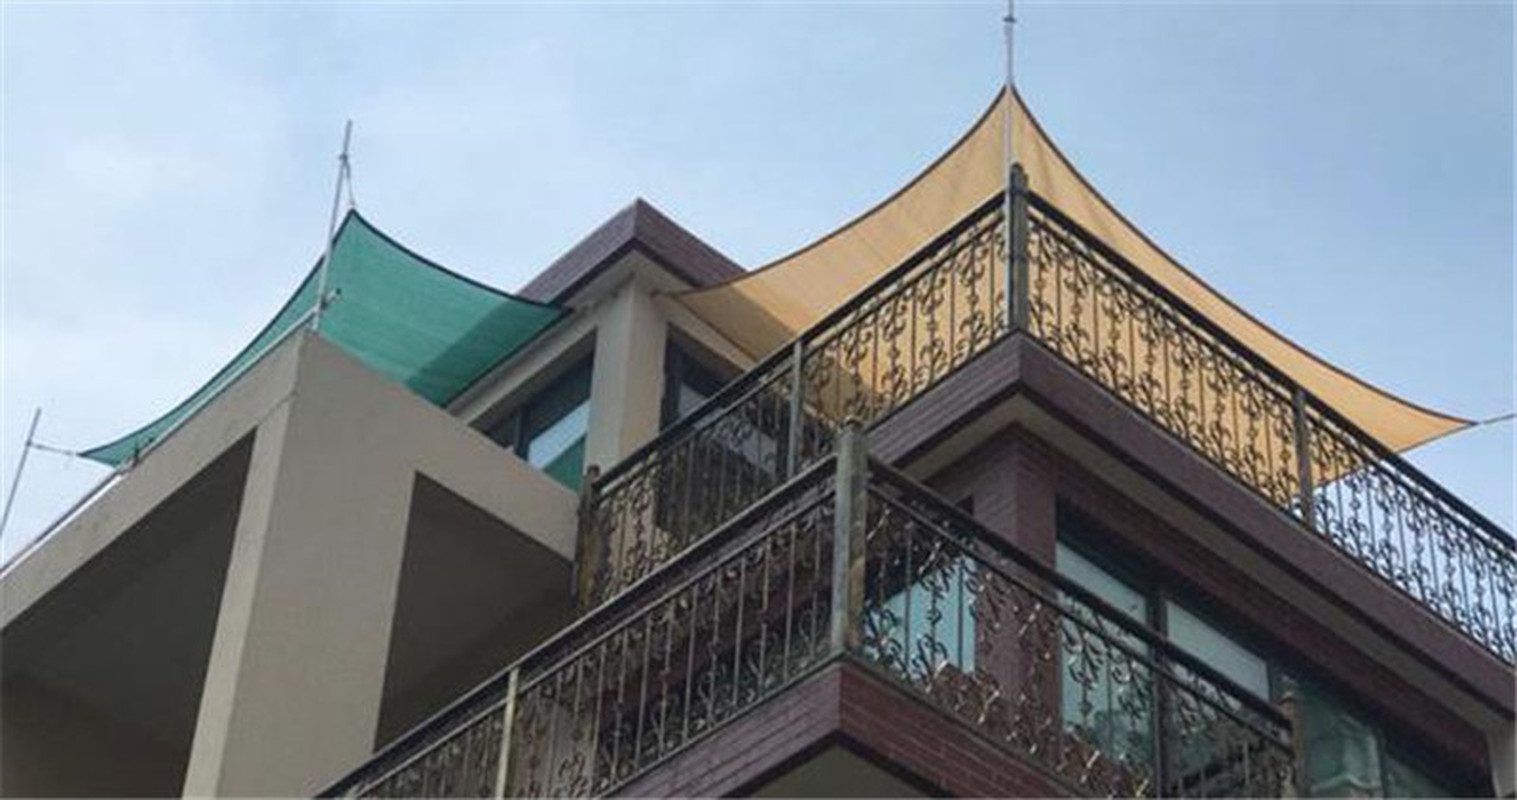 HDPE Shade Sail Custom Made High Density Thick Outdoor Sun Shade Net Anti Uv Awning Canopy Suitable for Balcony Garden Courtyard